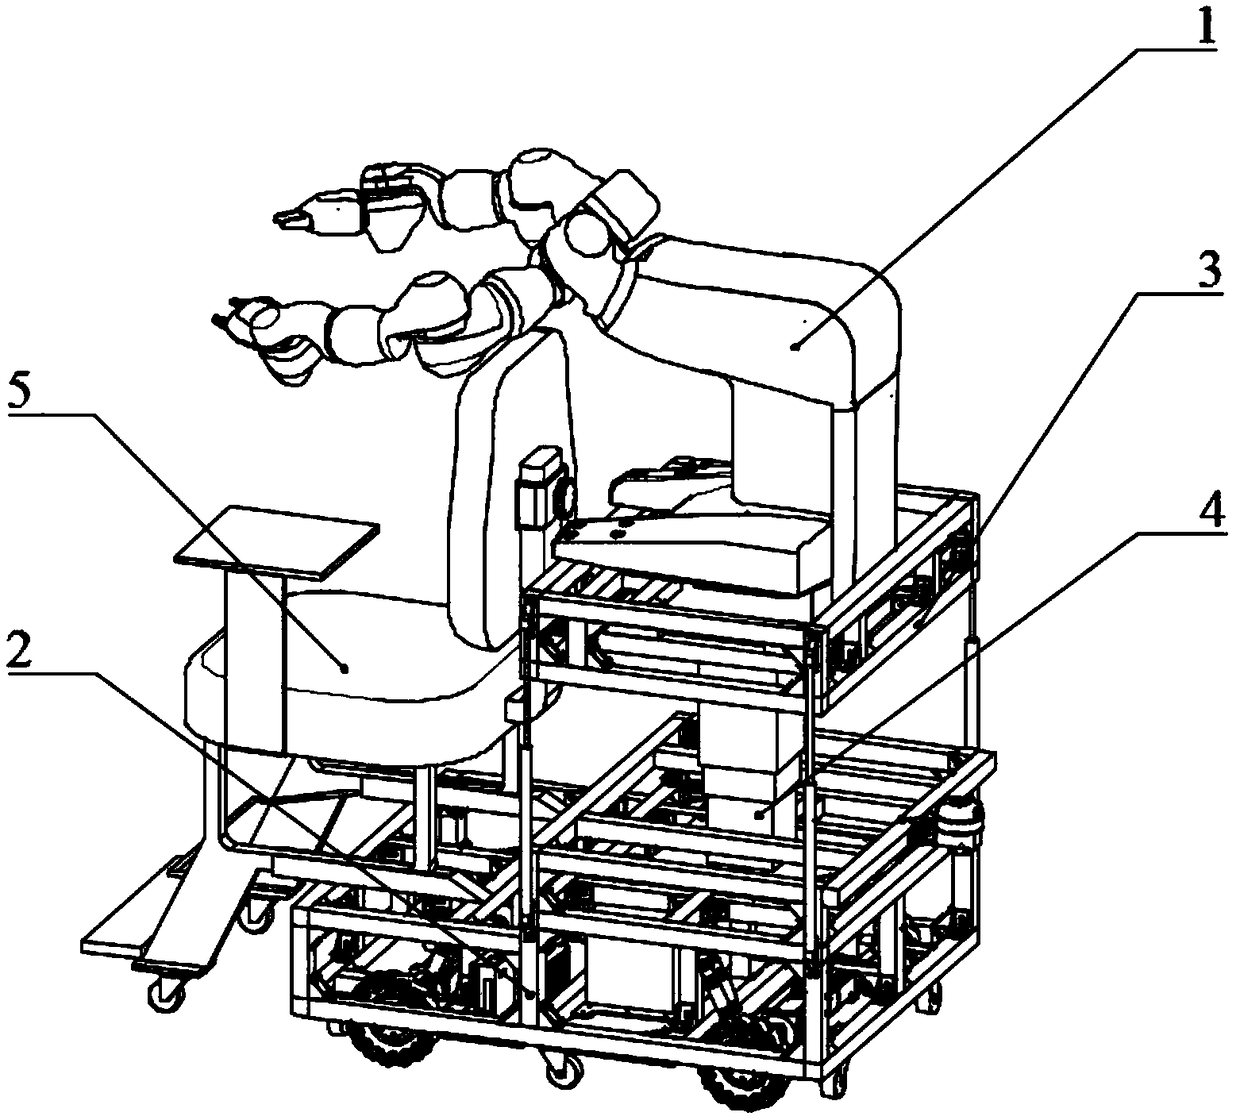 Carrying type two-arm omni-directional moving nursing robot